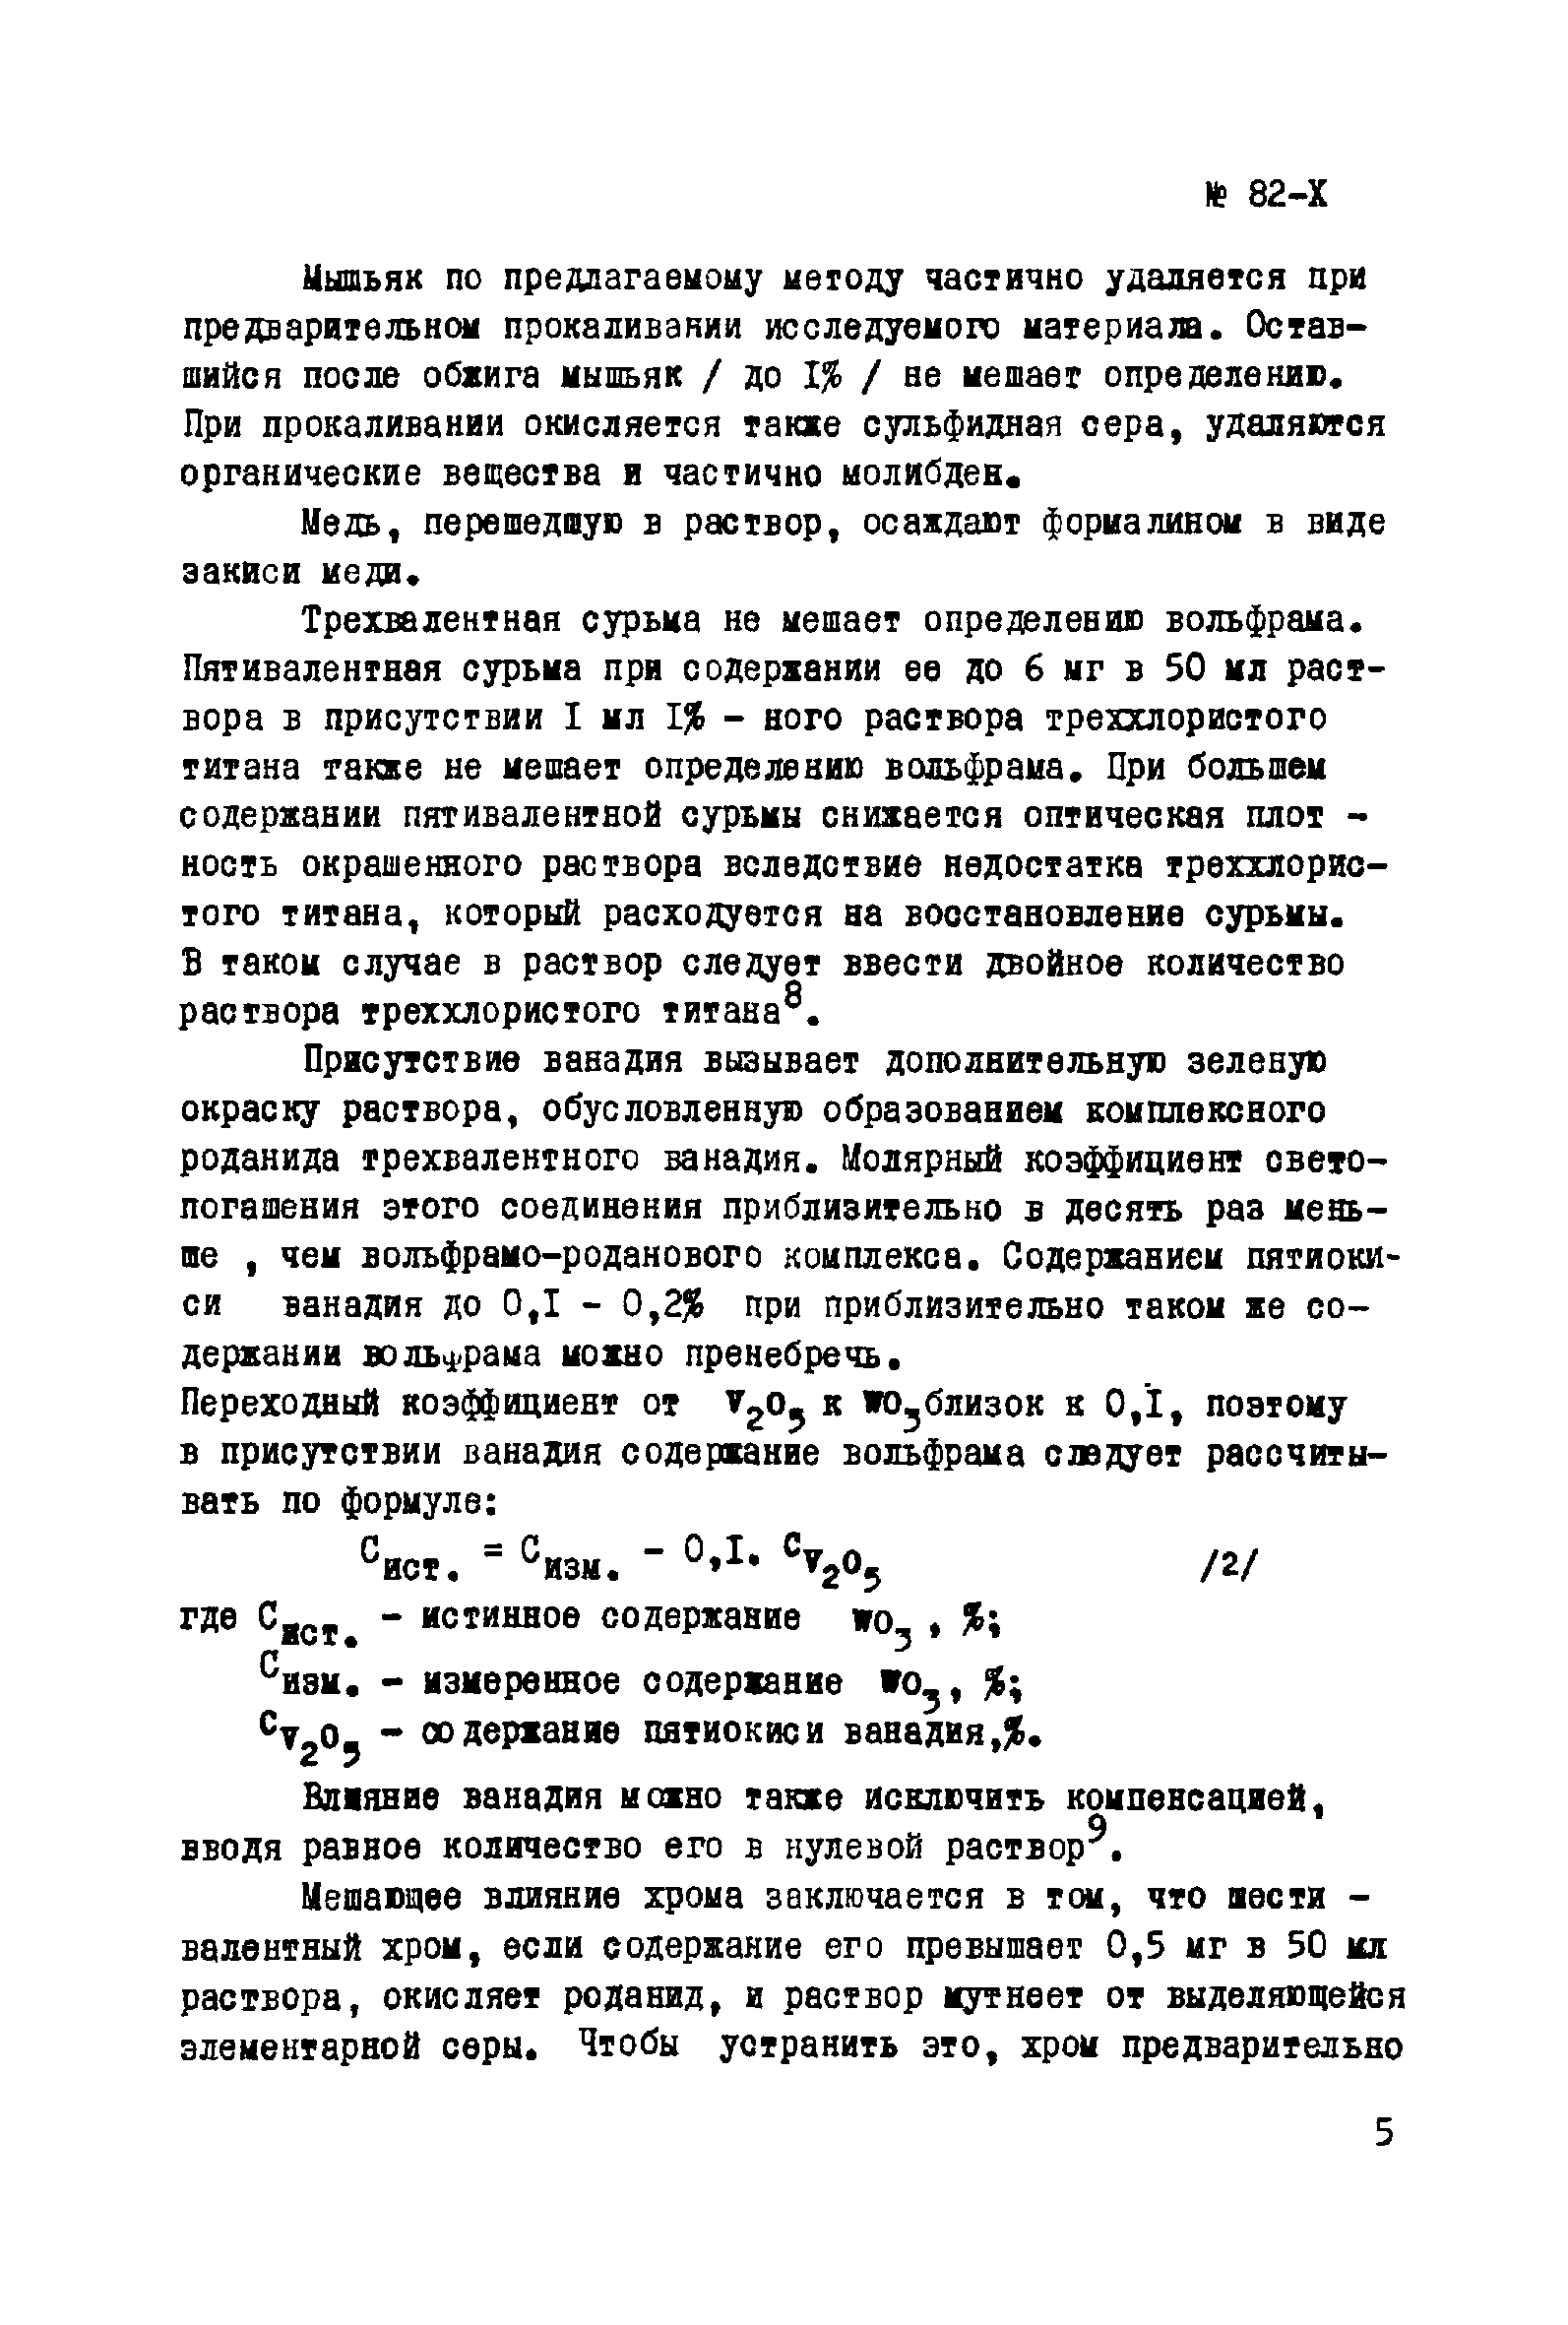 Инструкция НСАМ 82-Х